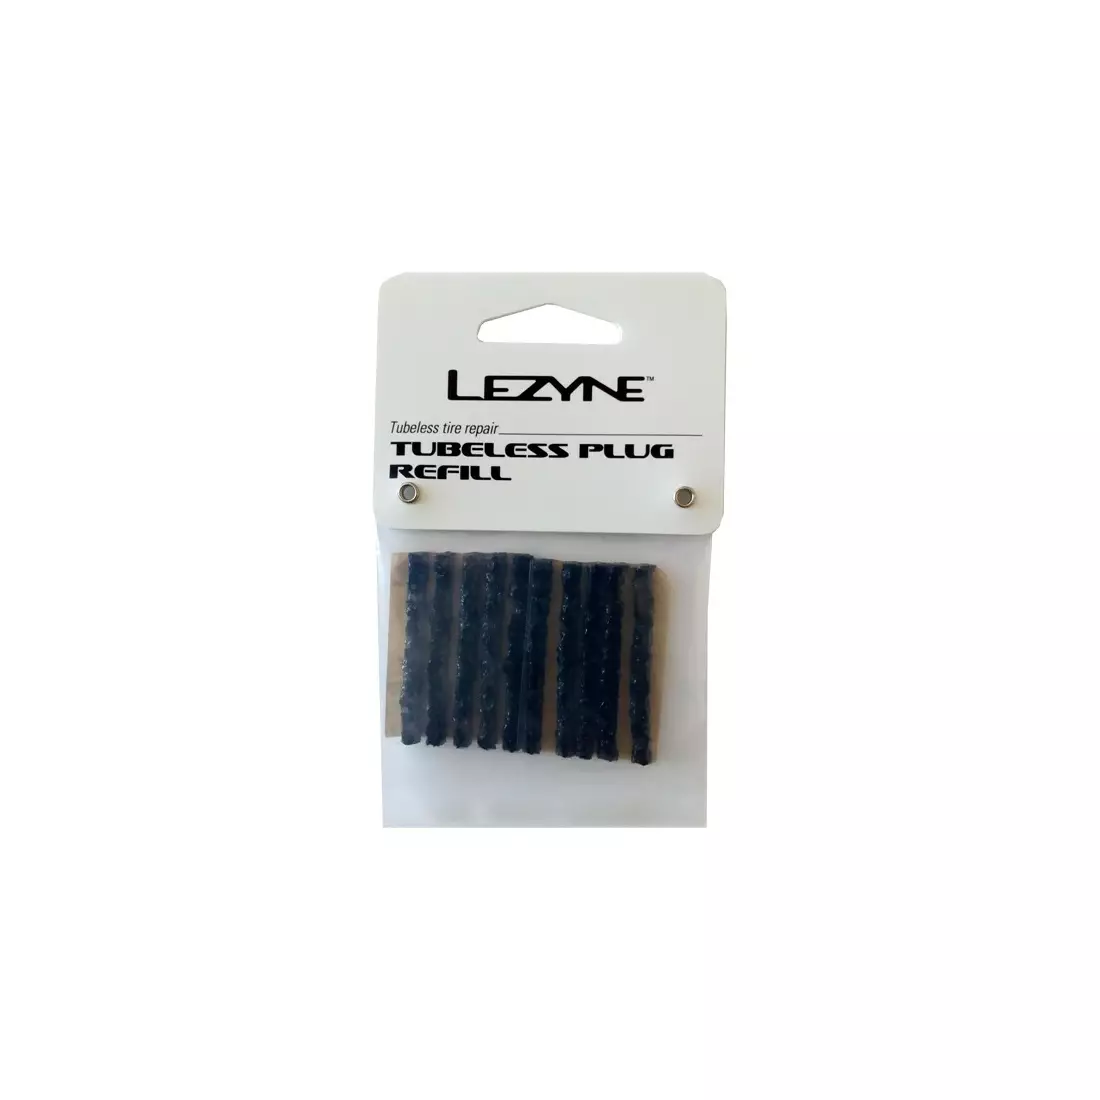 LEZYNE elastic for tyre tubeless repair tubeless plug refill-20 (20 cartridges) LZN-1-PK-PTBLS-V104-20